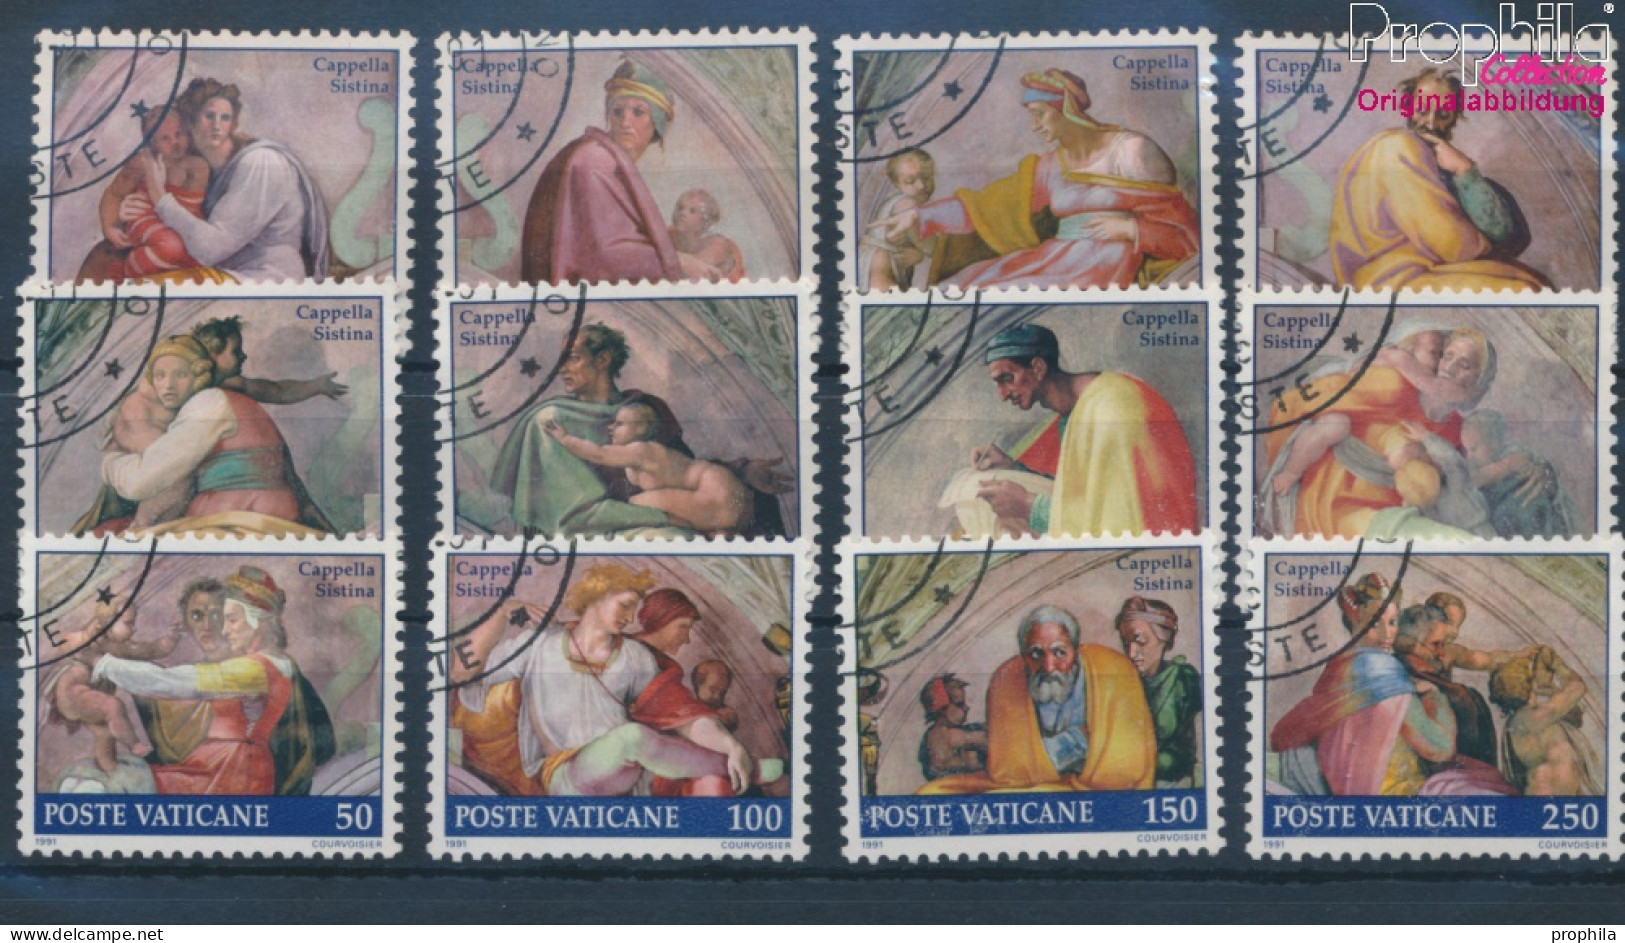 Vatikanstadt 1023-1034 (kompl.Ausgabe) Gestempelt 1991 Kapelle (10352229 - Used Stamps